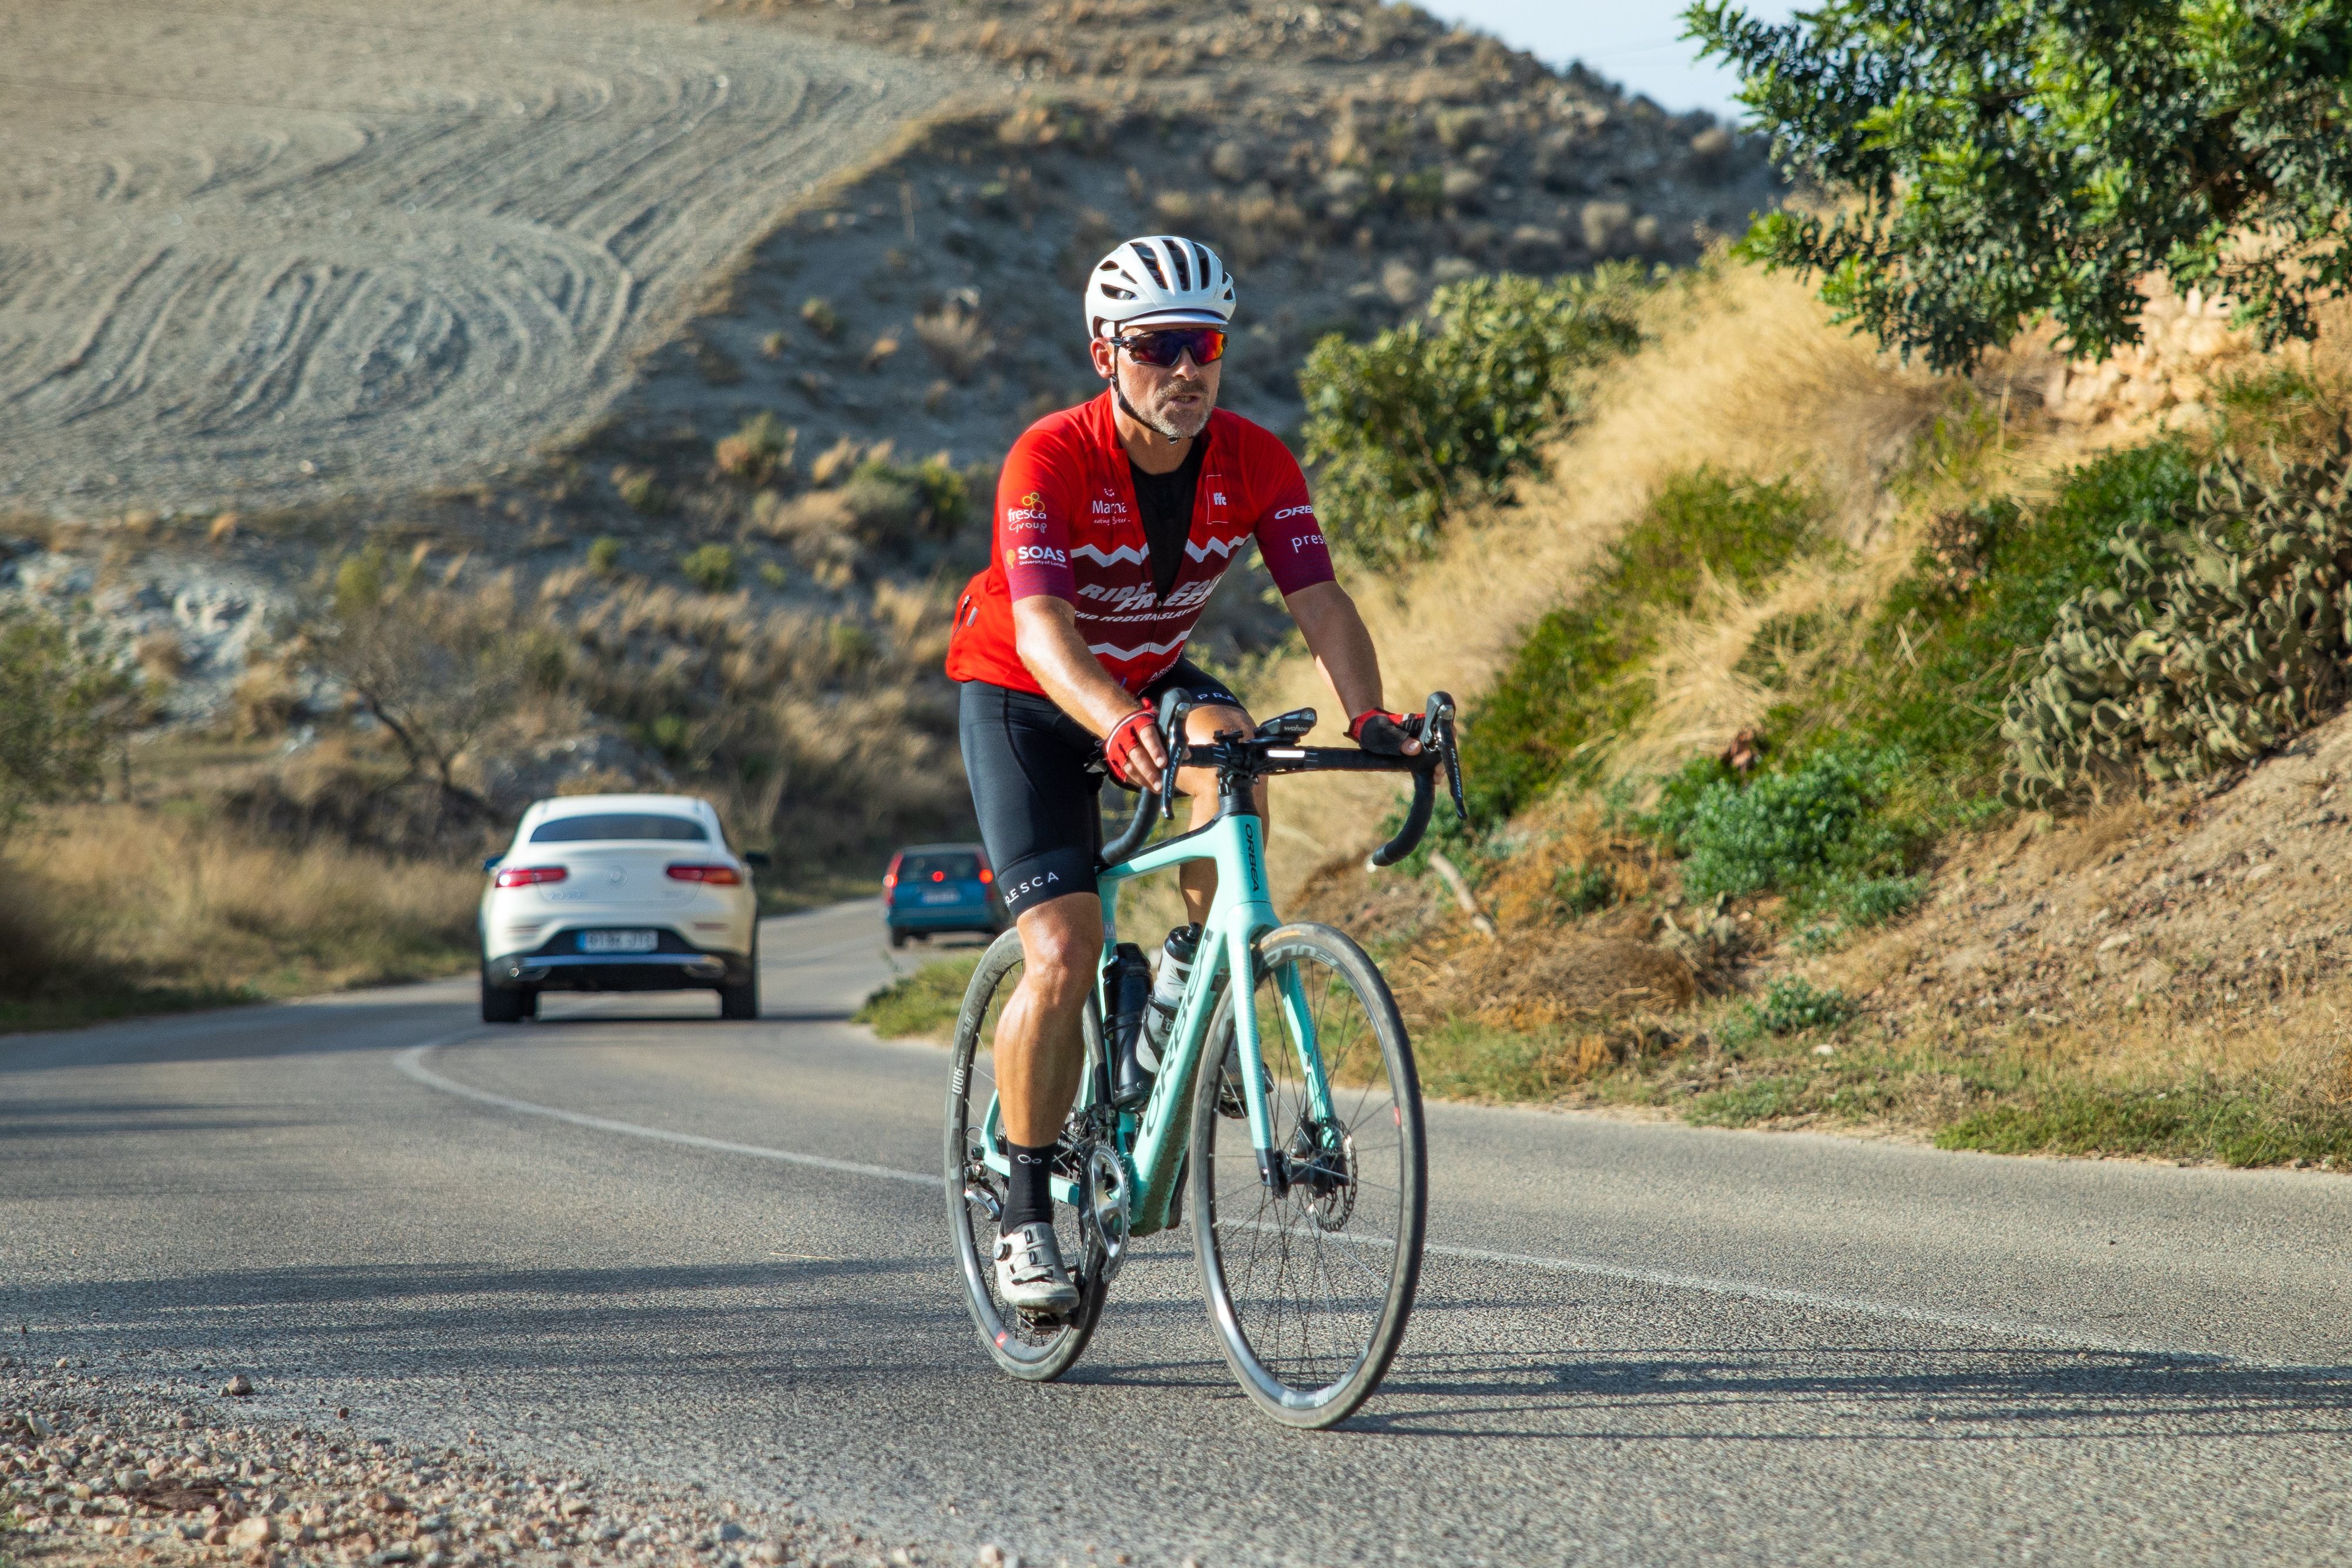 Gordon Miller cycling along a road in Spain.